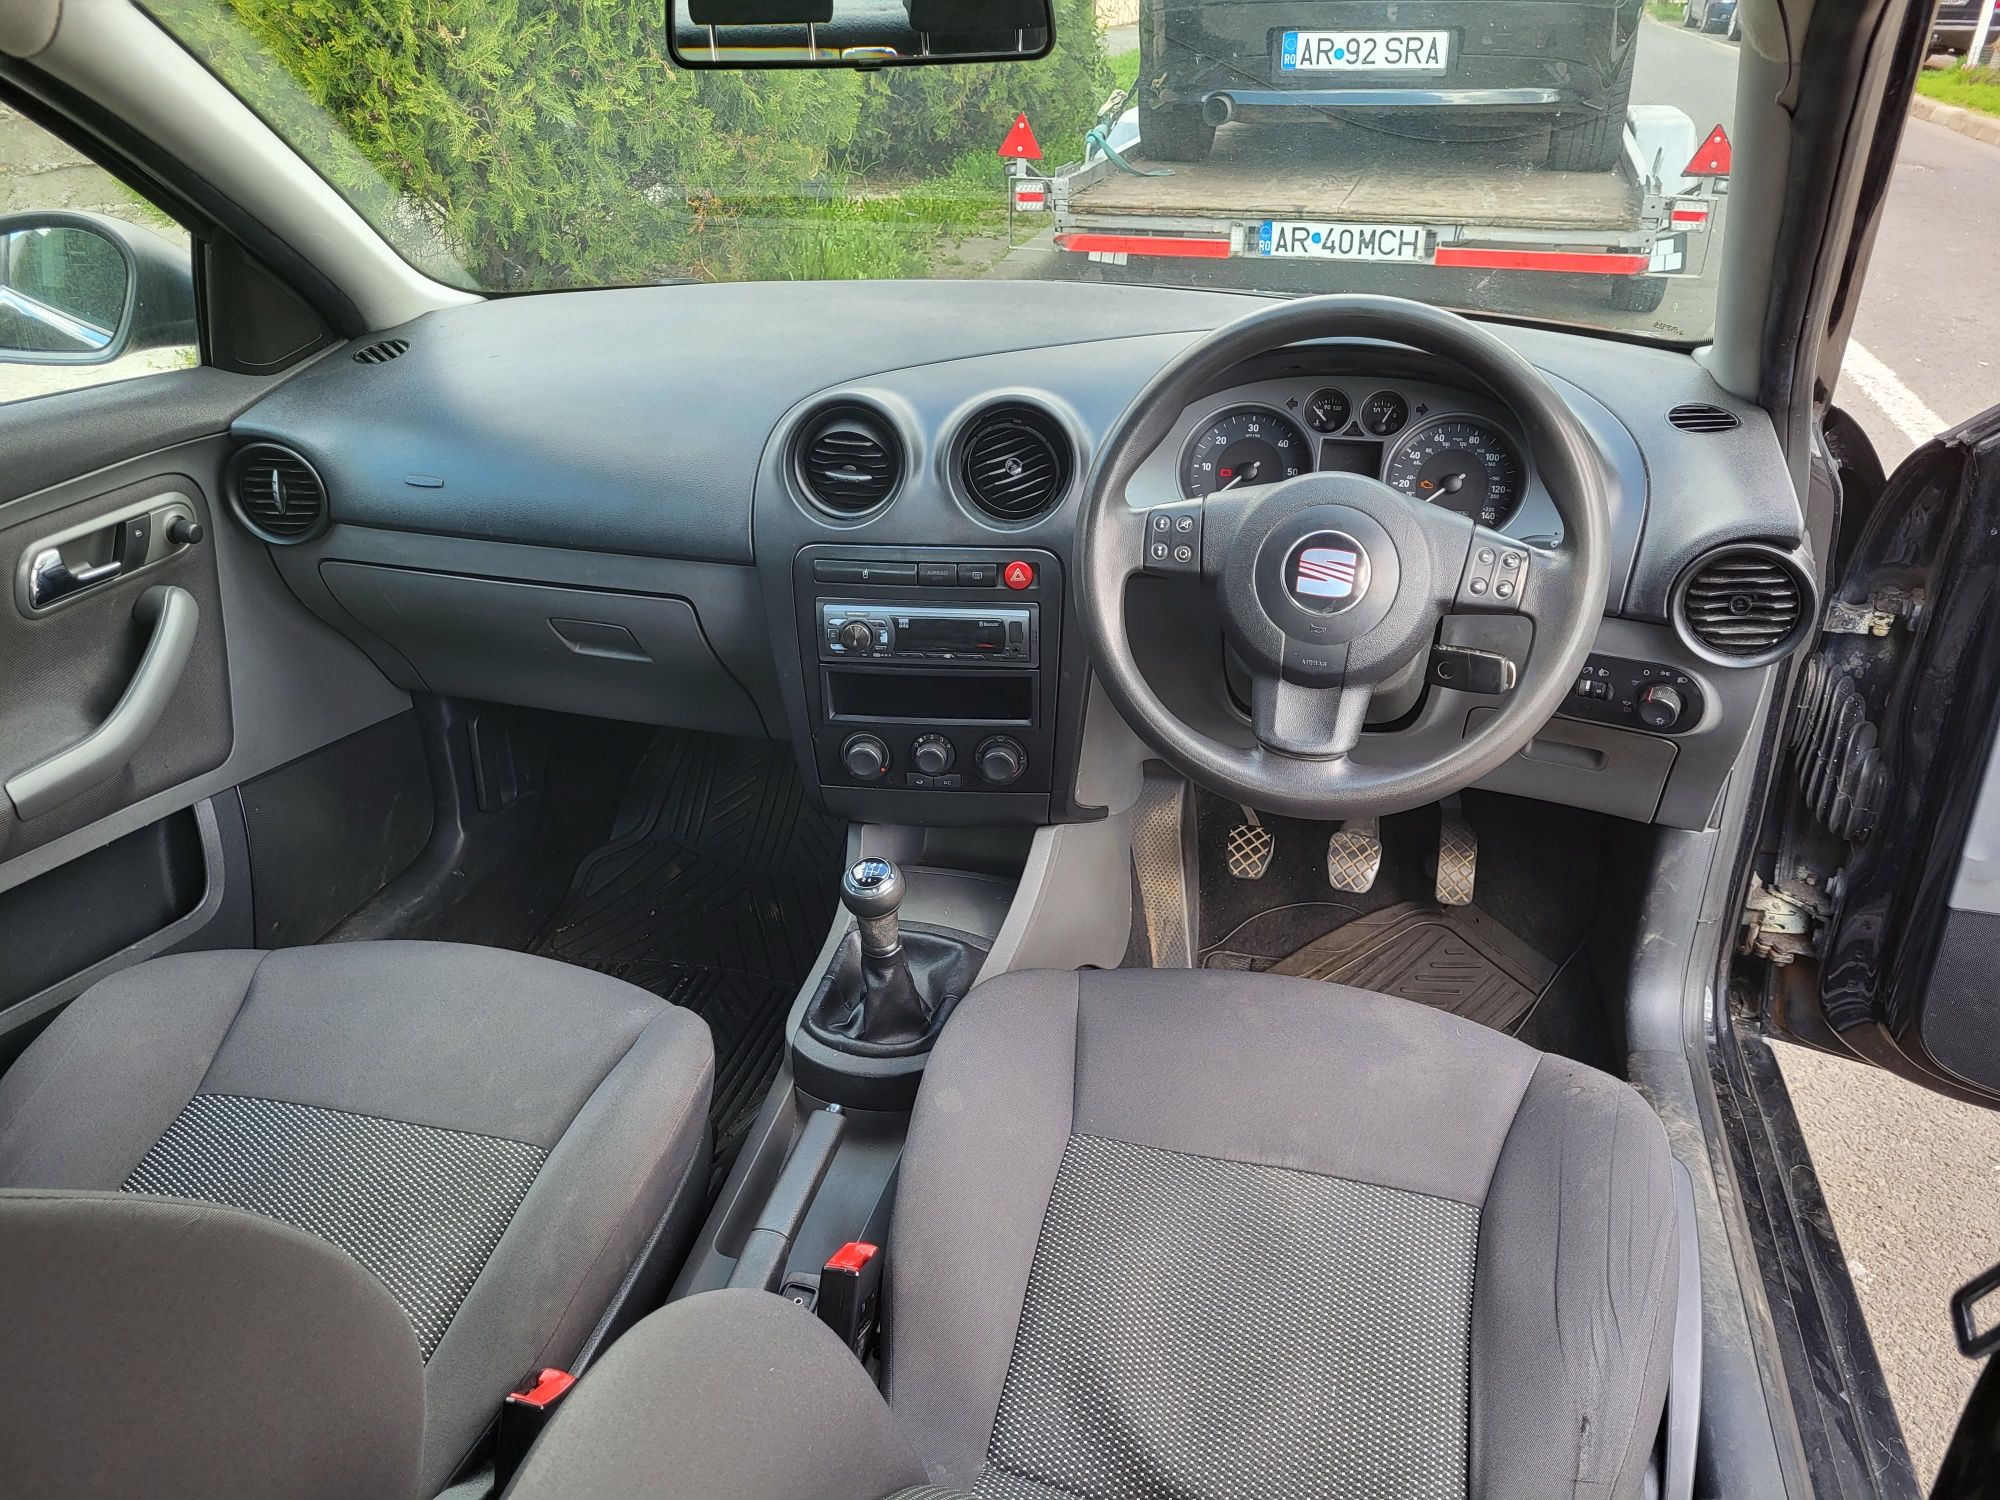 Dezmembrez Seat Ibiza 1.4 TDI 80 cp an 2008 Euro 4 cod motor BMS